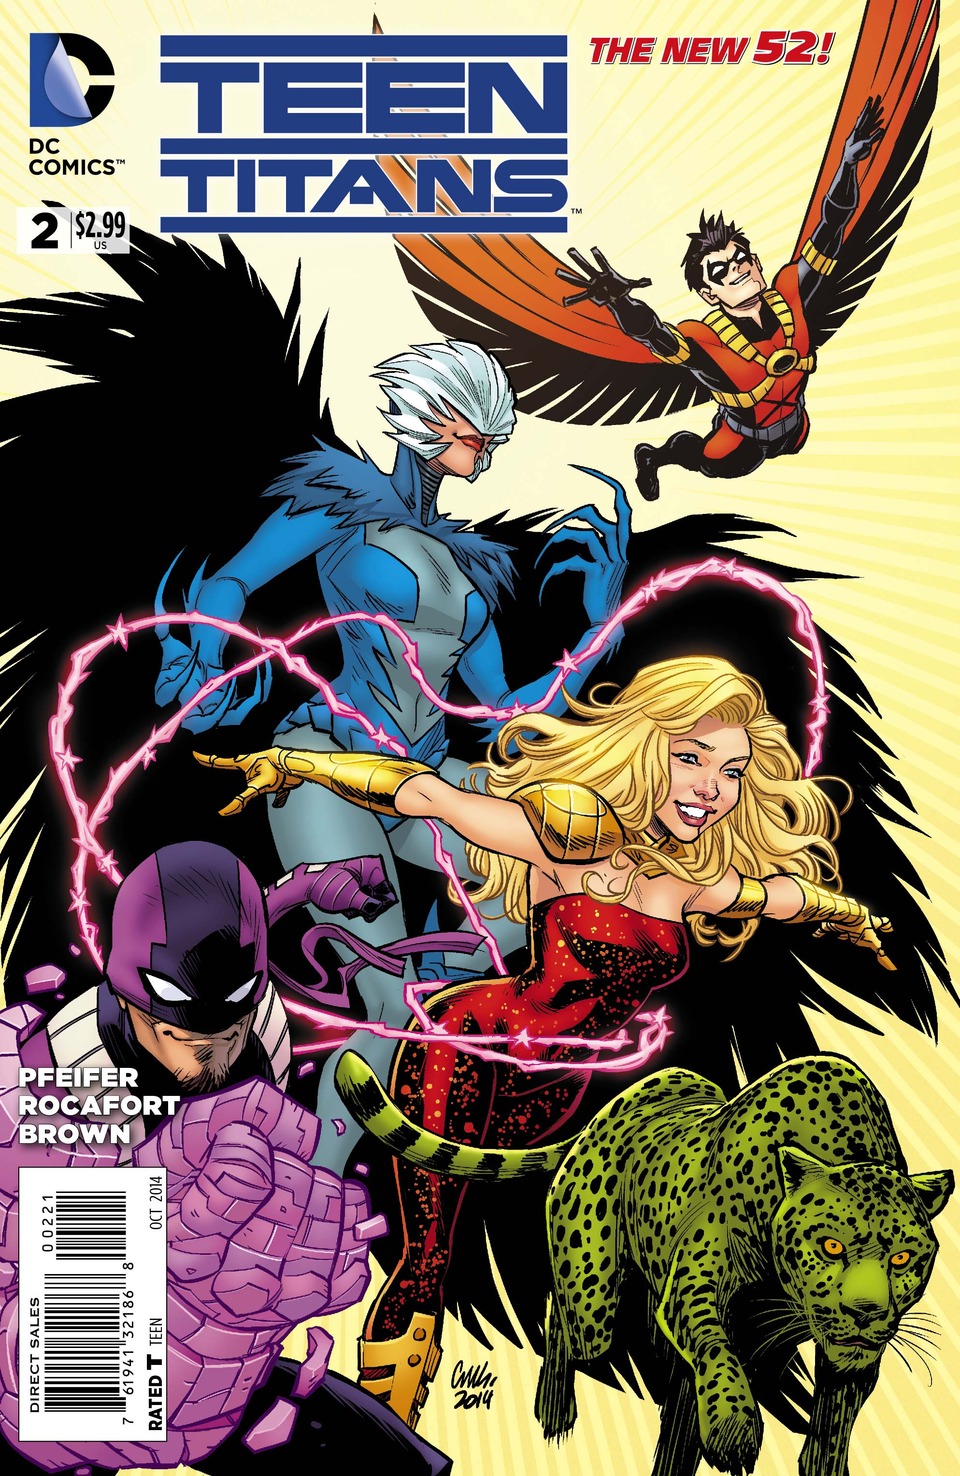 Variant cover art for 'Teen Titans' #2 by Cameron Stewart & Nathan Fairbairn